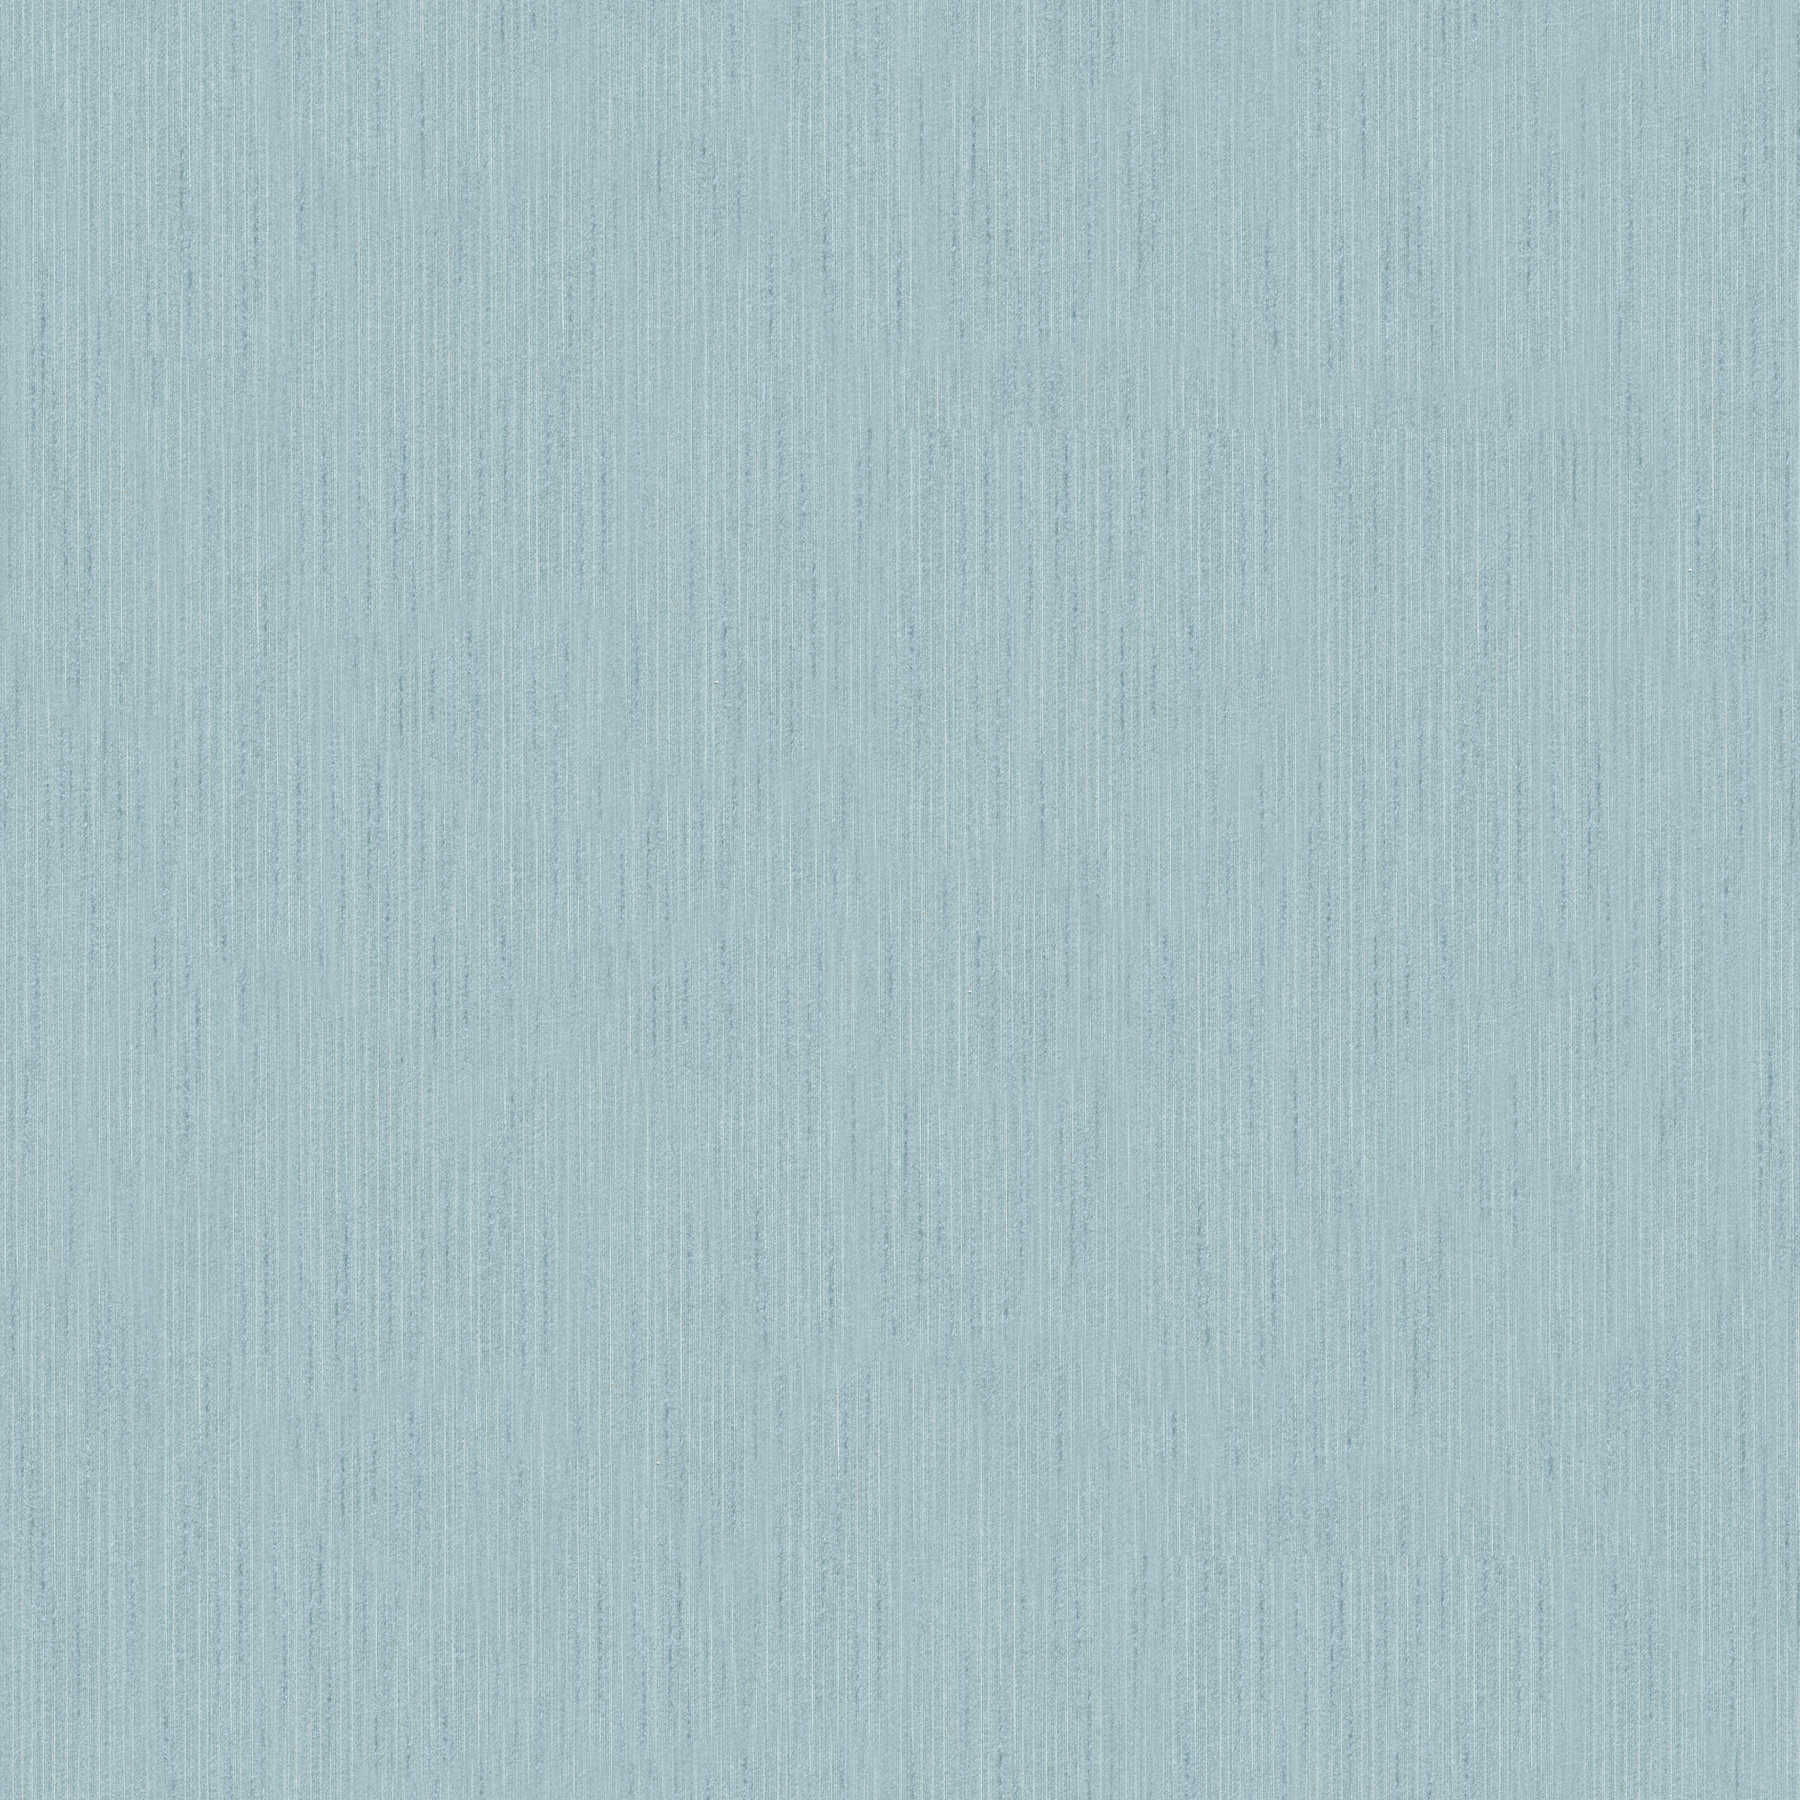 Tapete Blau Grau mit Struktureffekt & melierter Farbe & Textileffekt
